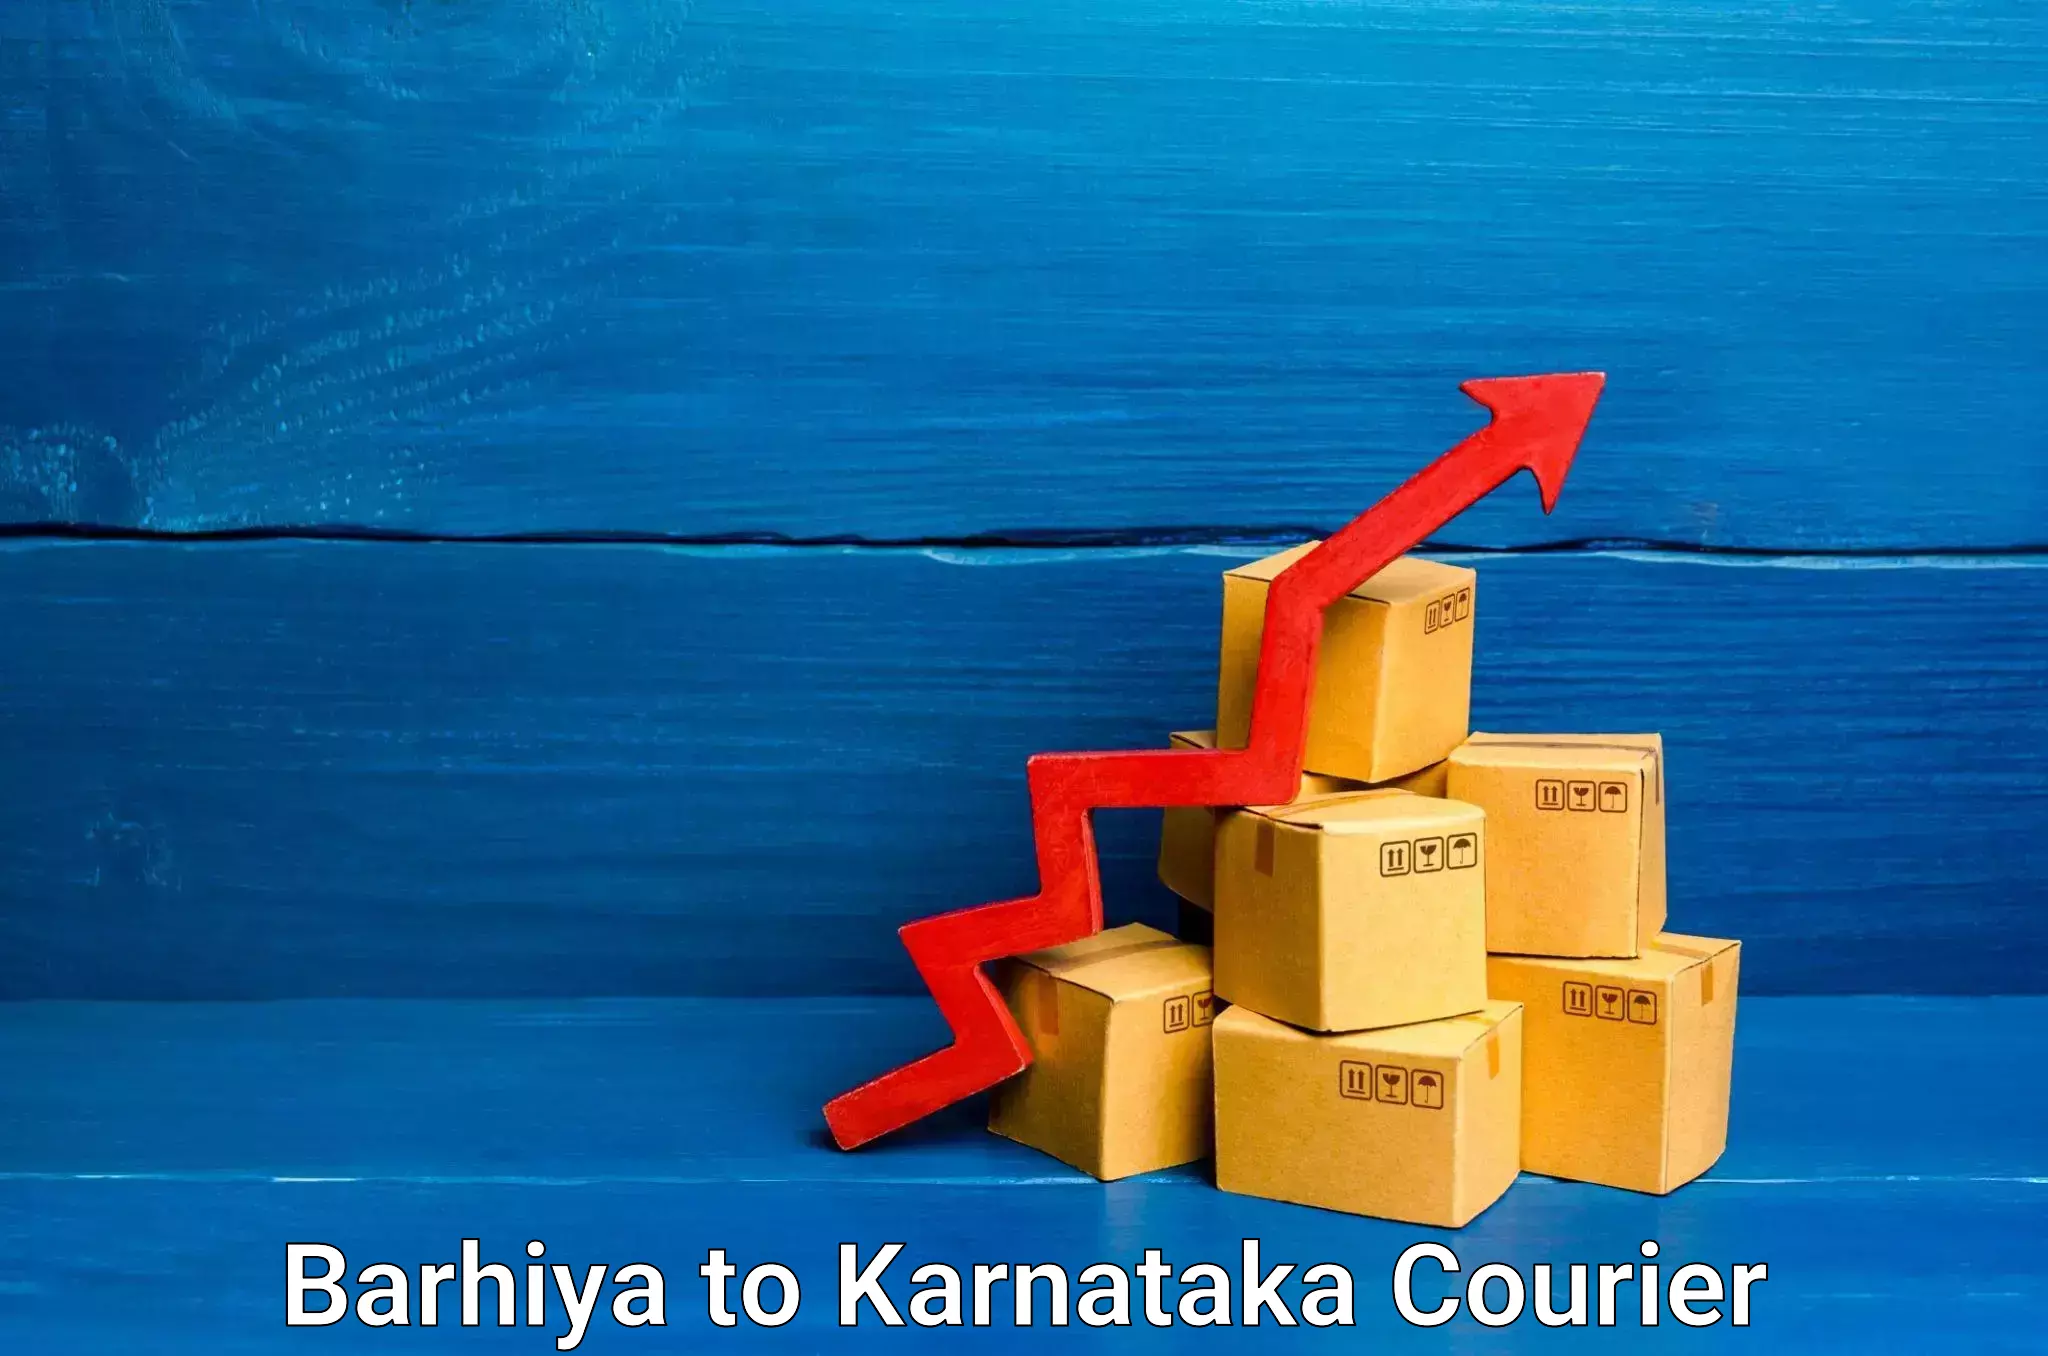 Furniture transport company Barhiya to Karnataka